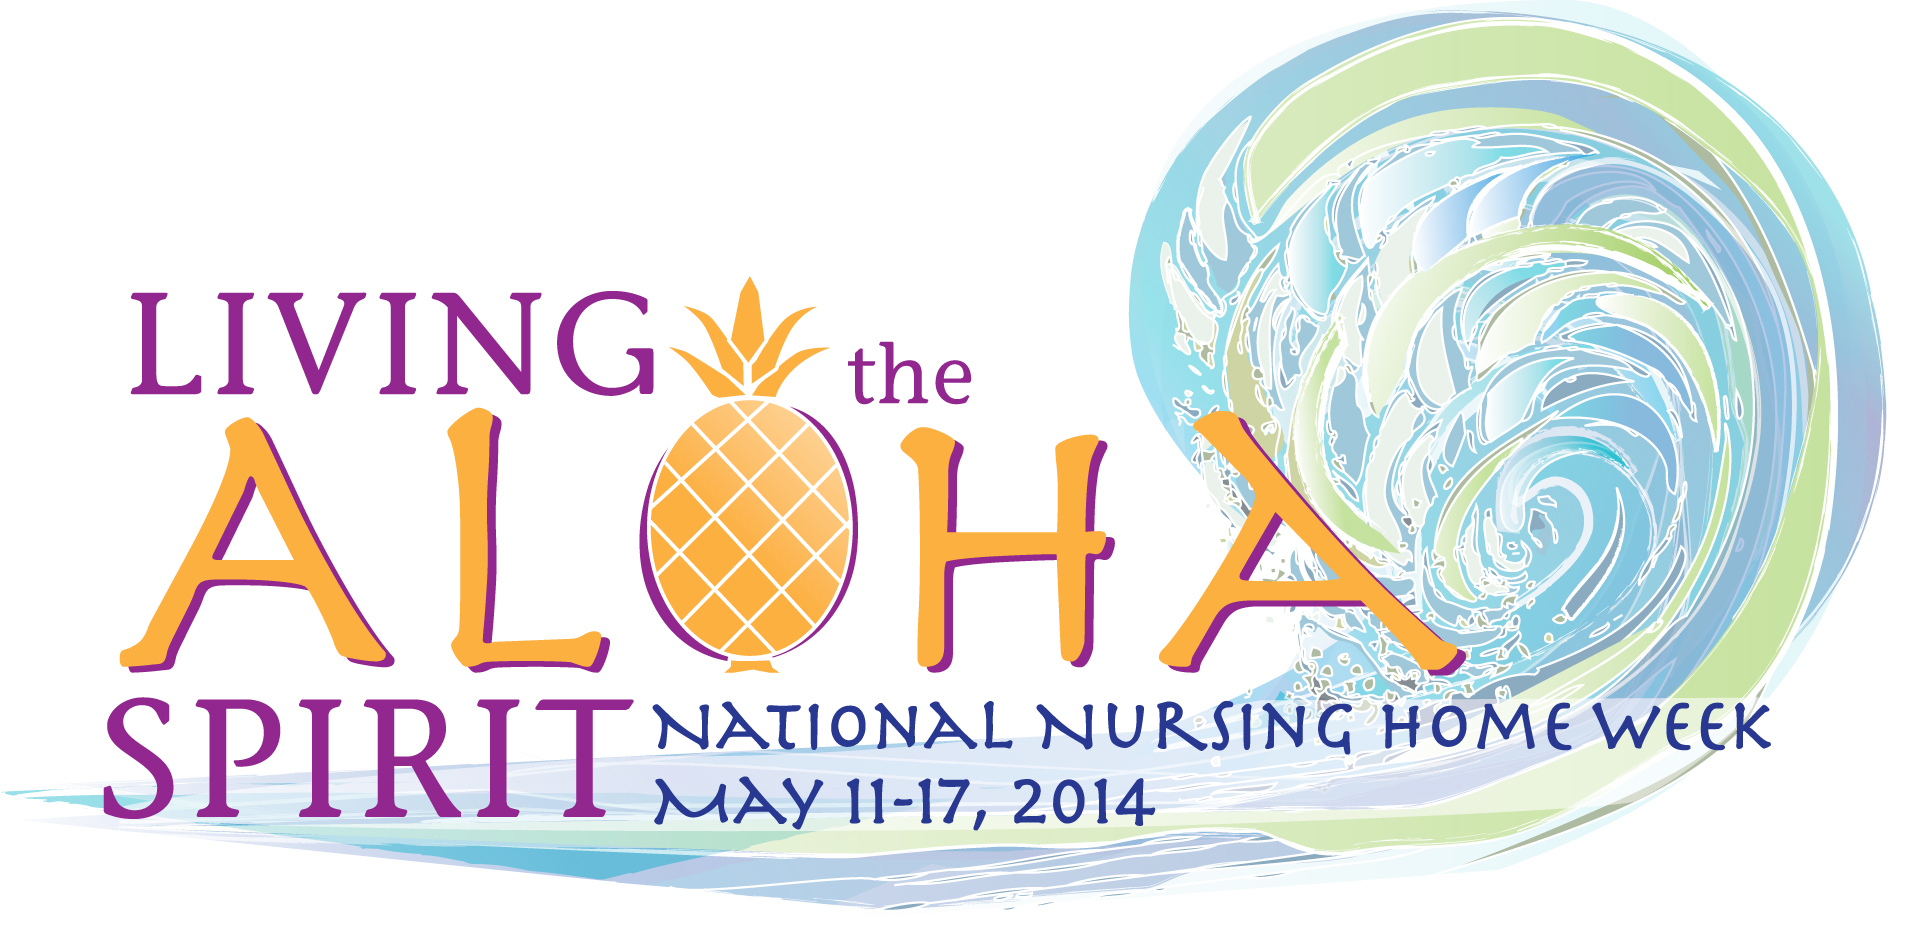 National Nursing Home Week Theme Announced